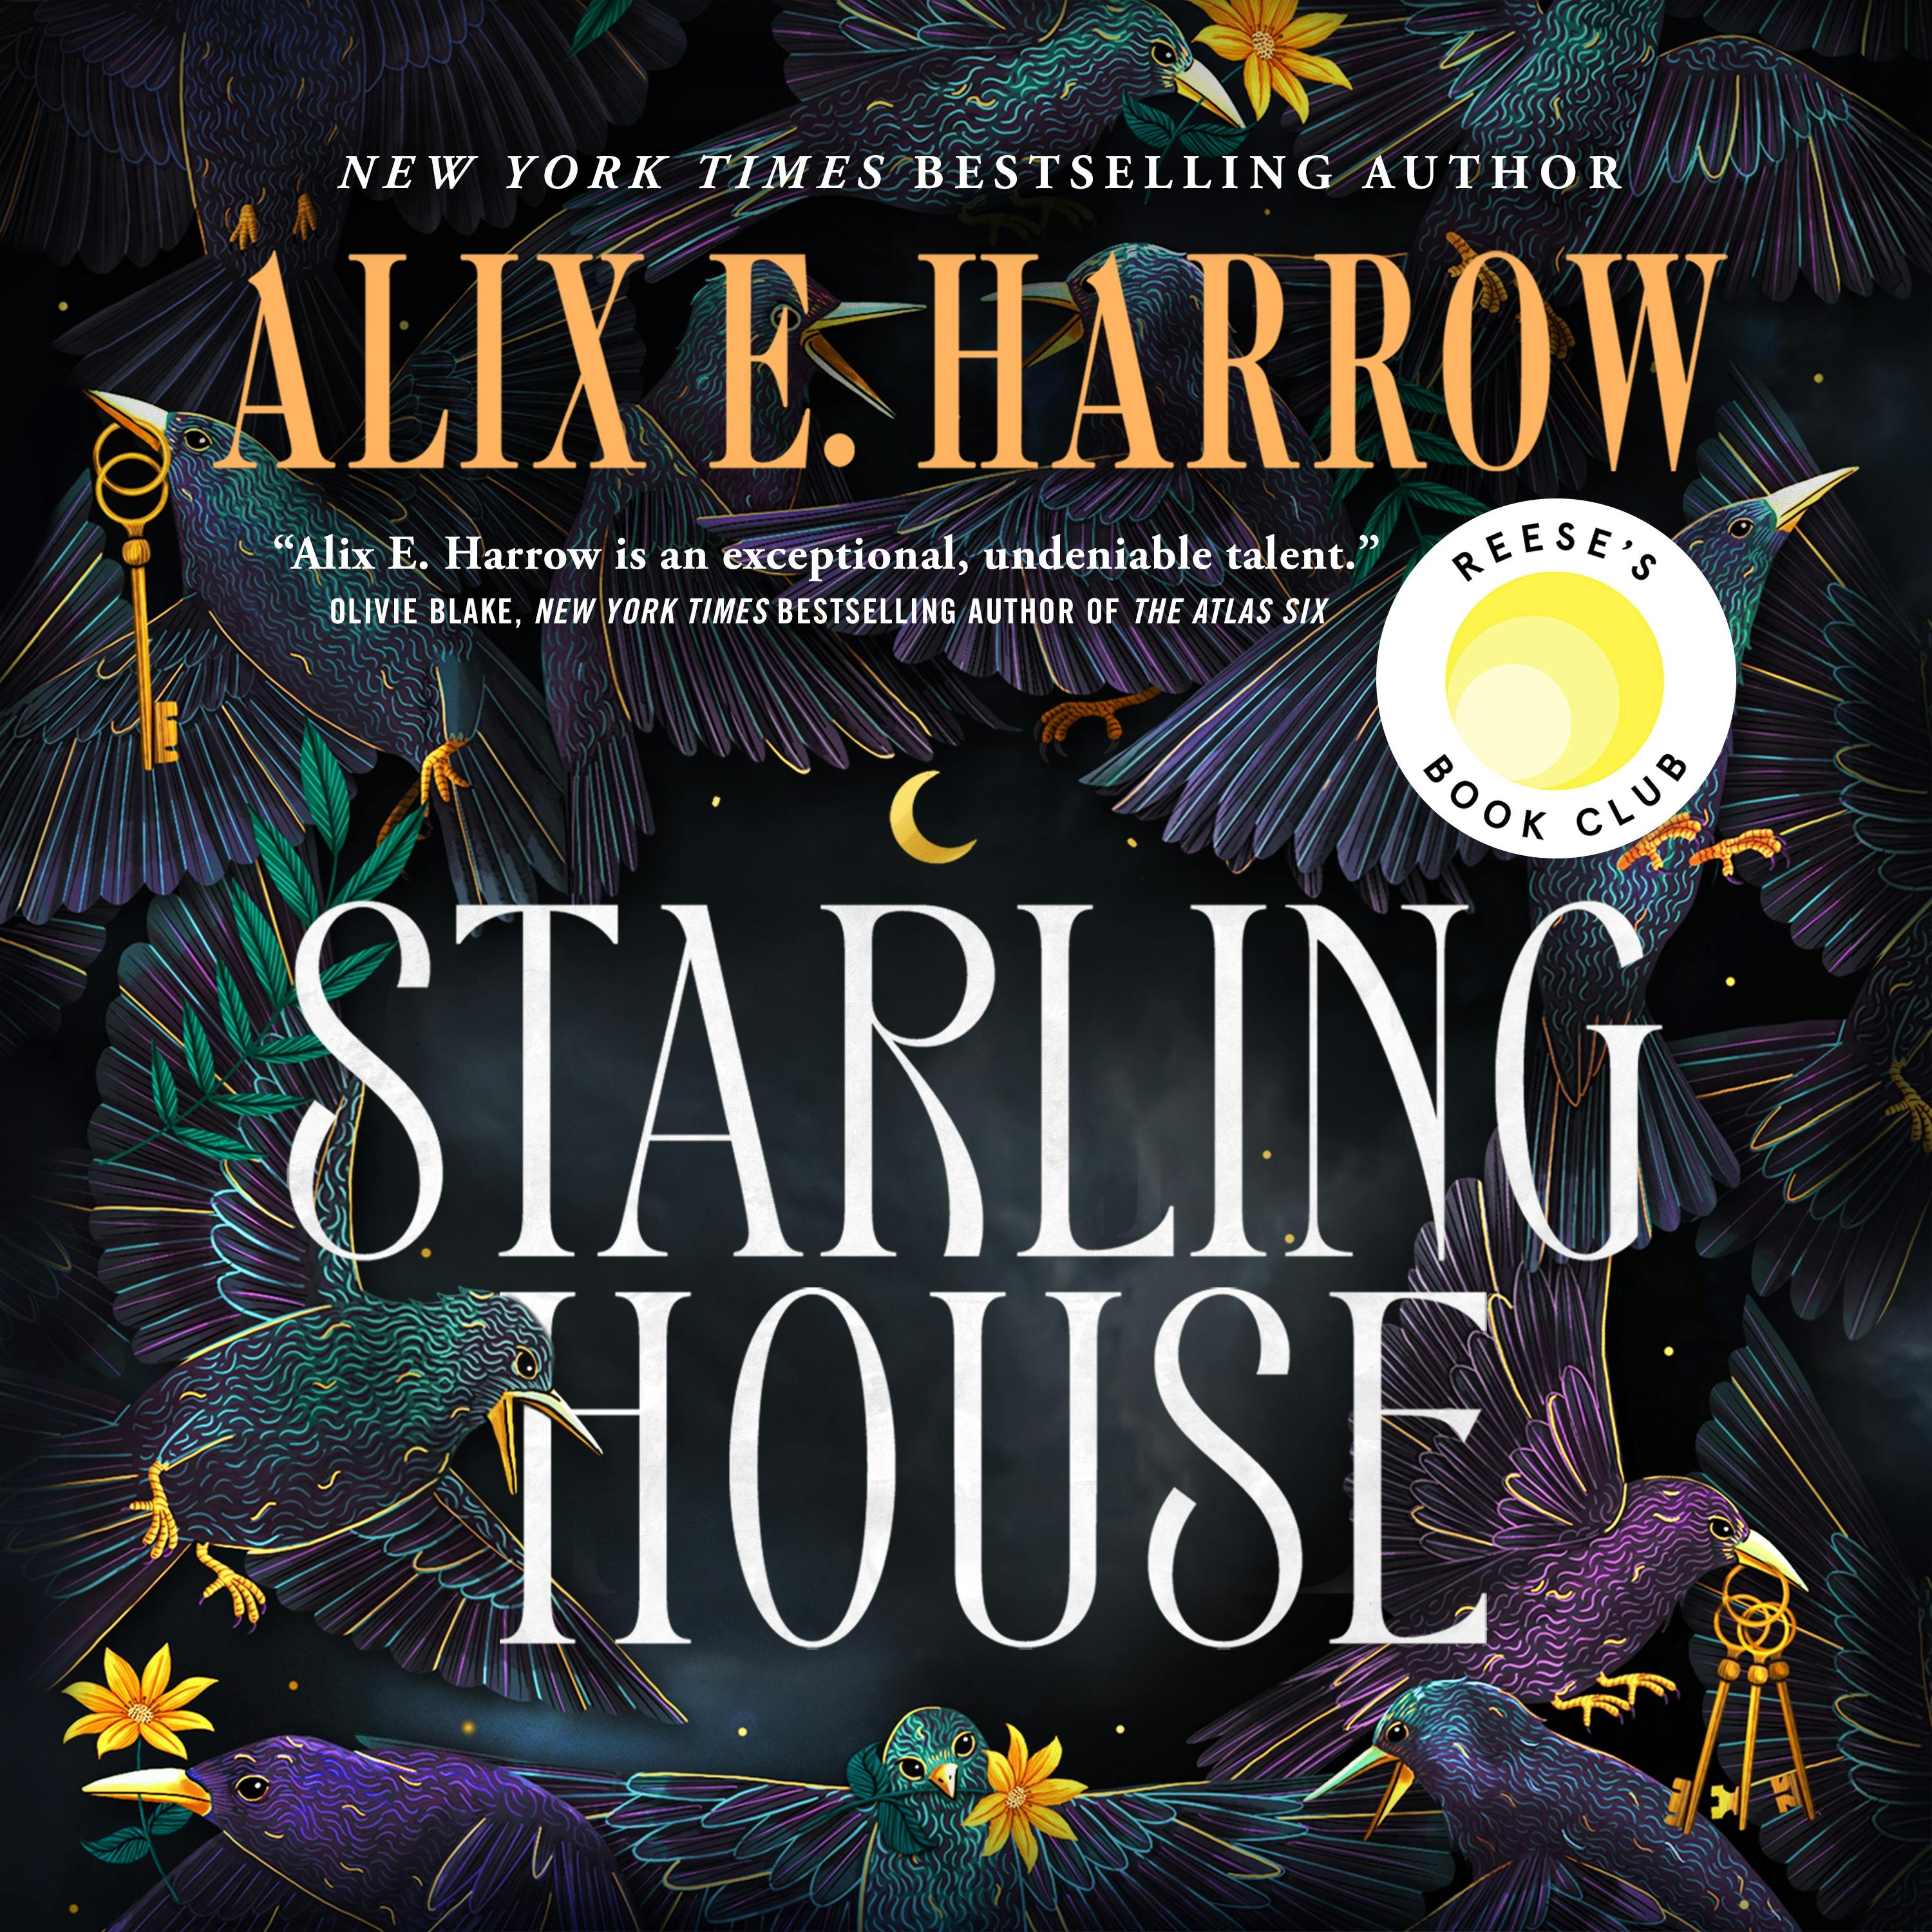 Alix E. Harrow's Multi-Genre Starling House Builds a Home Inside a